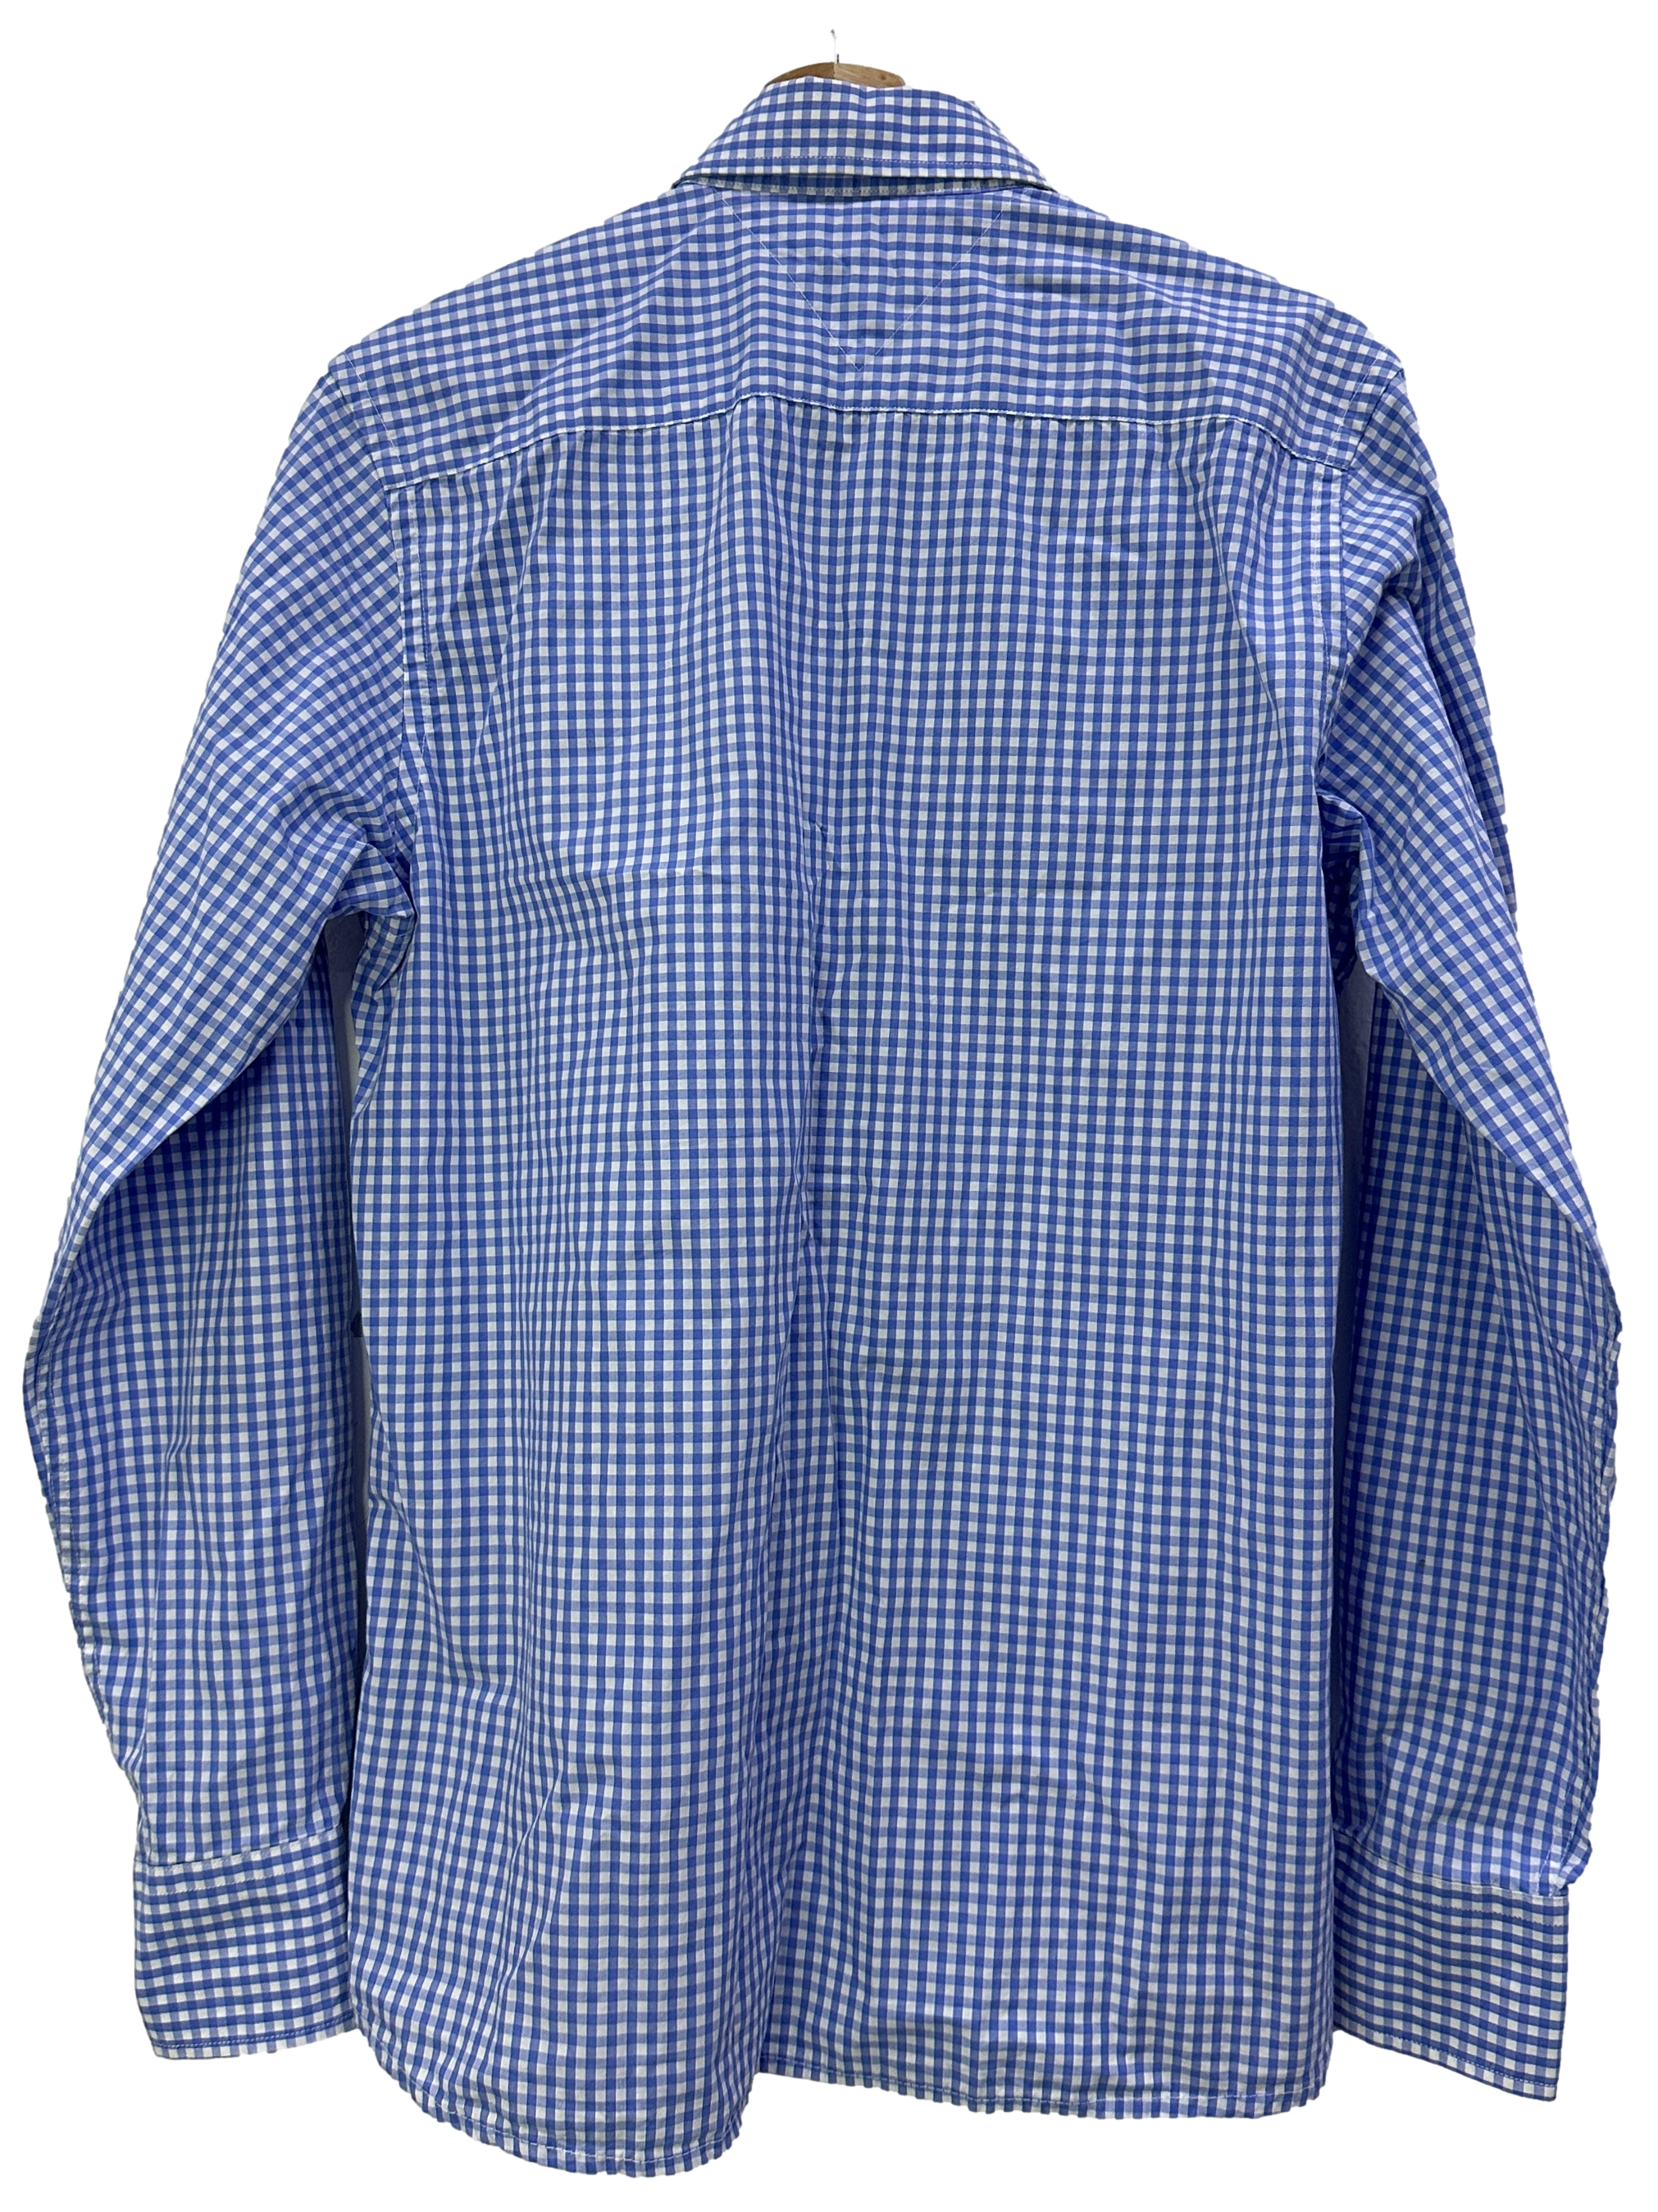 Blue & White Check Button Up Shirt